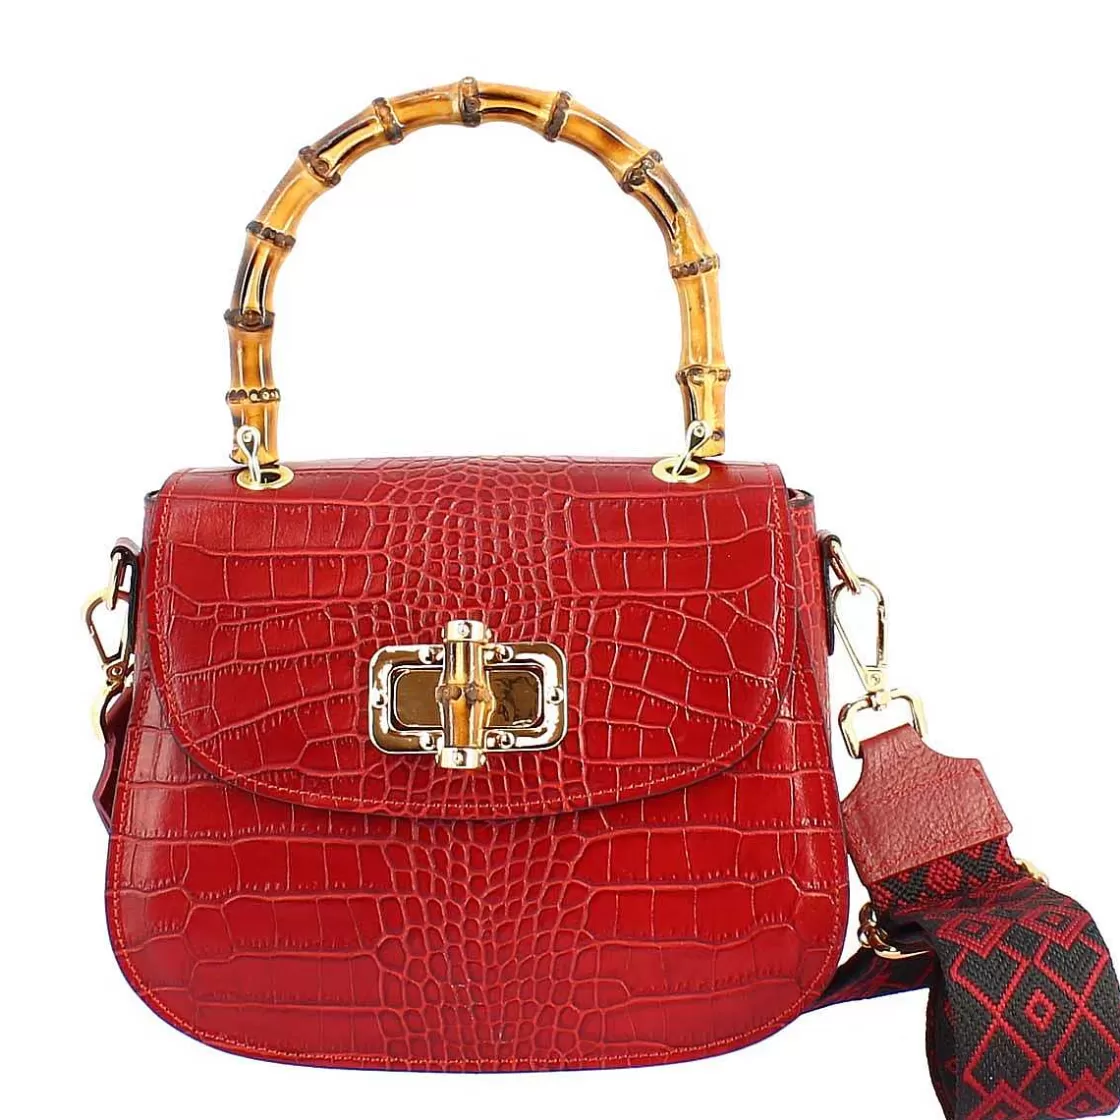 Leonardo Handmade Women'S Handbag In Burgundy Leather With Removable Shoulder Strap Cheap